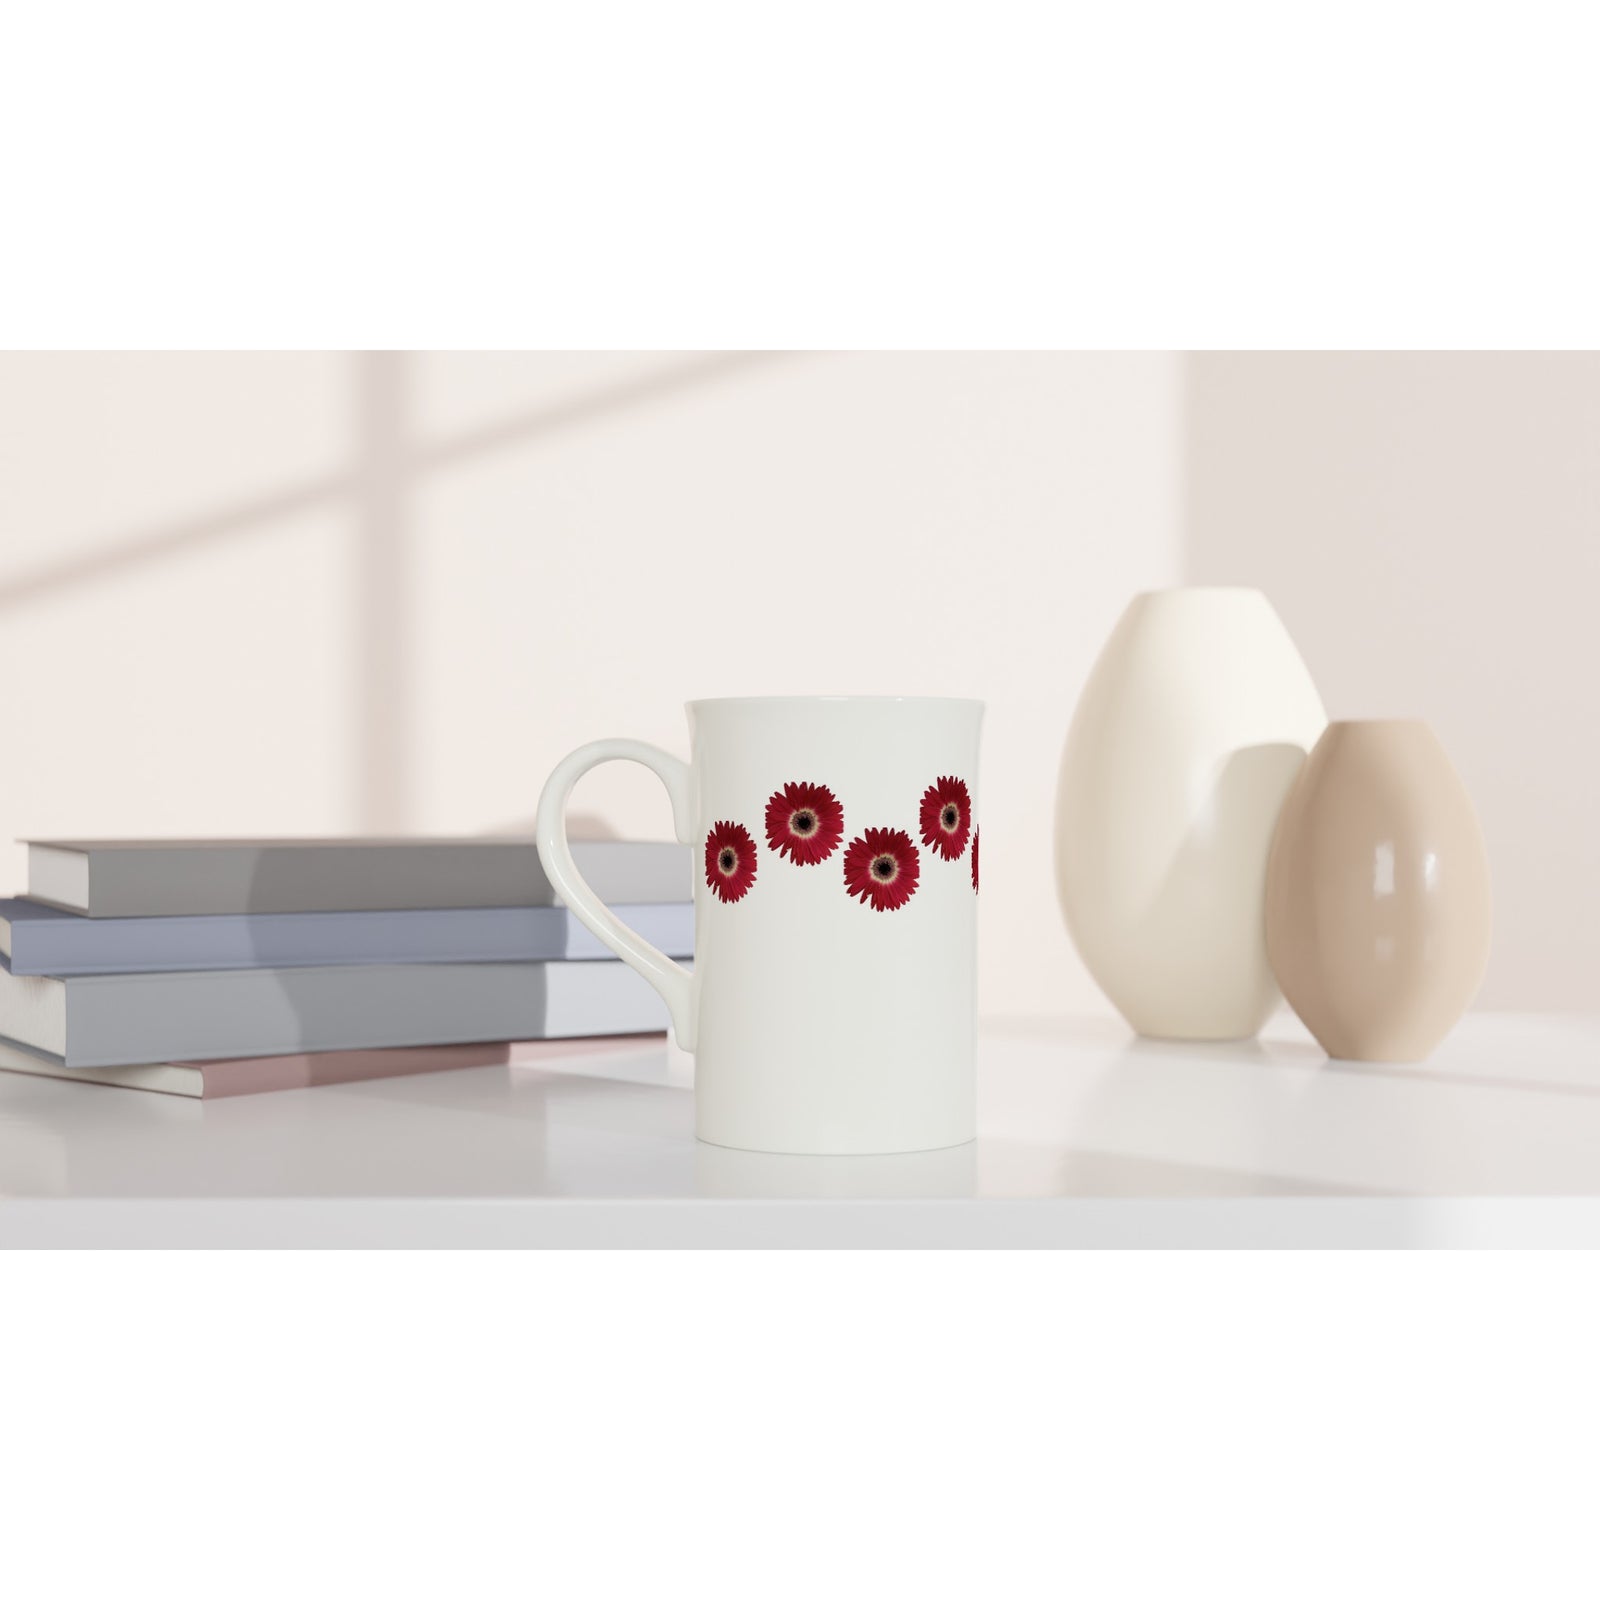 10 oz slim porcelain mug red gerbera daisy floral pattern